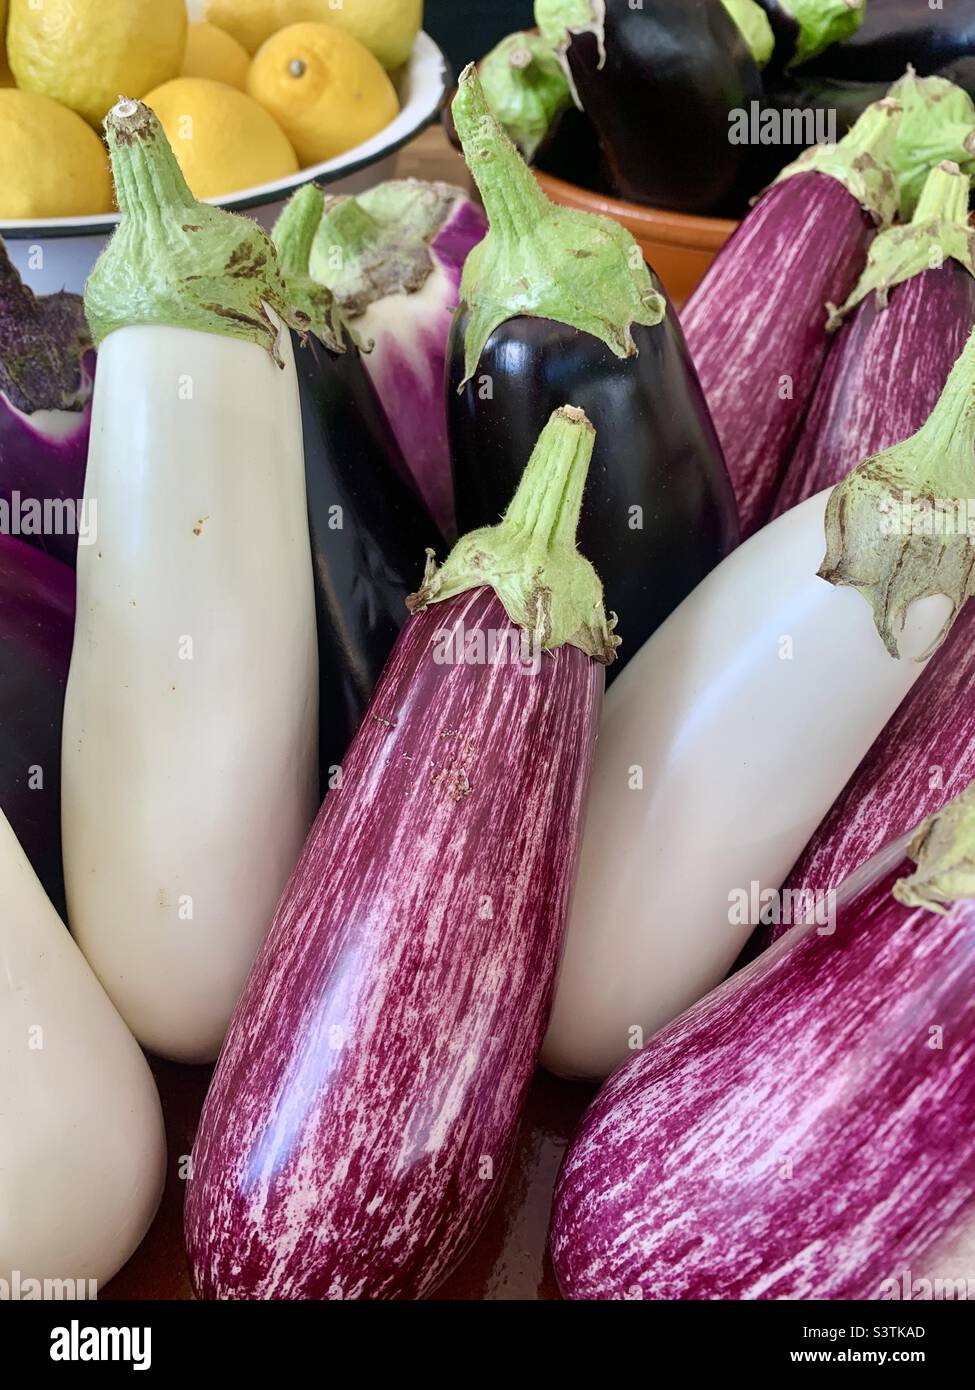 Mixed aubergines at food market Stock Photo